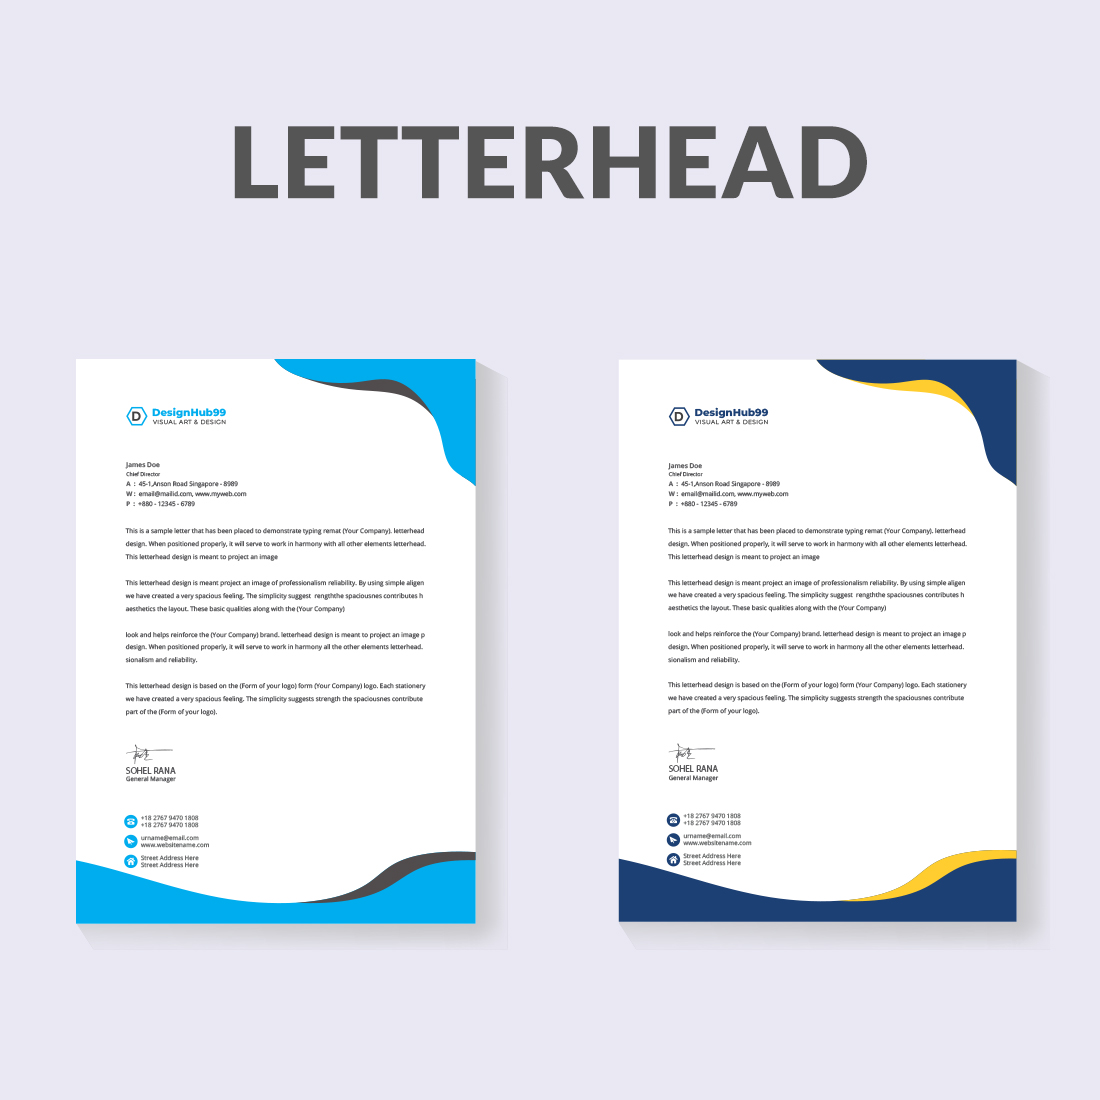 letterhead, business letterhead design cover image.